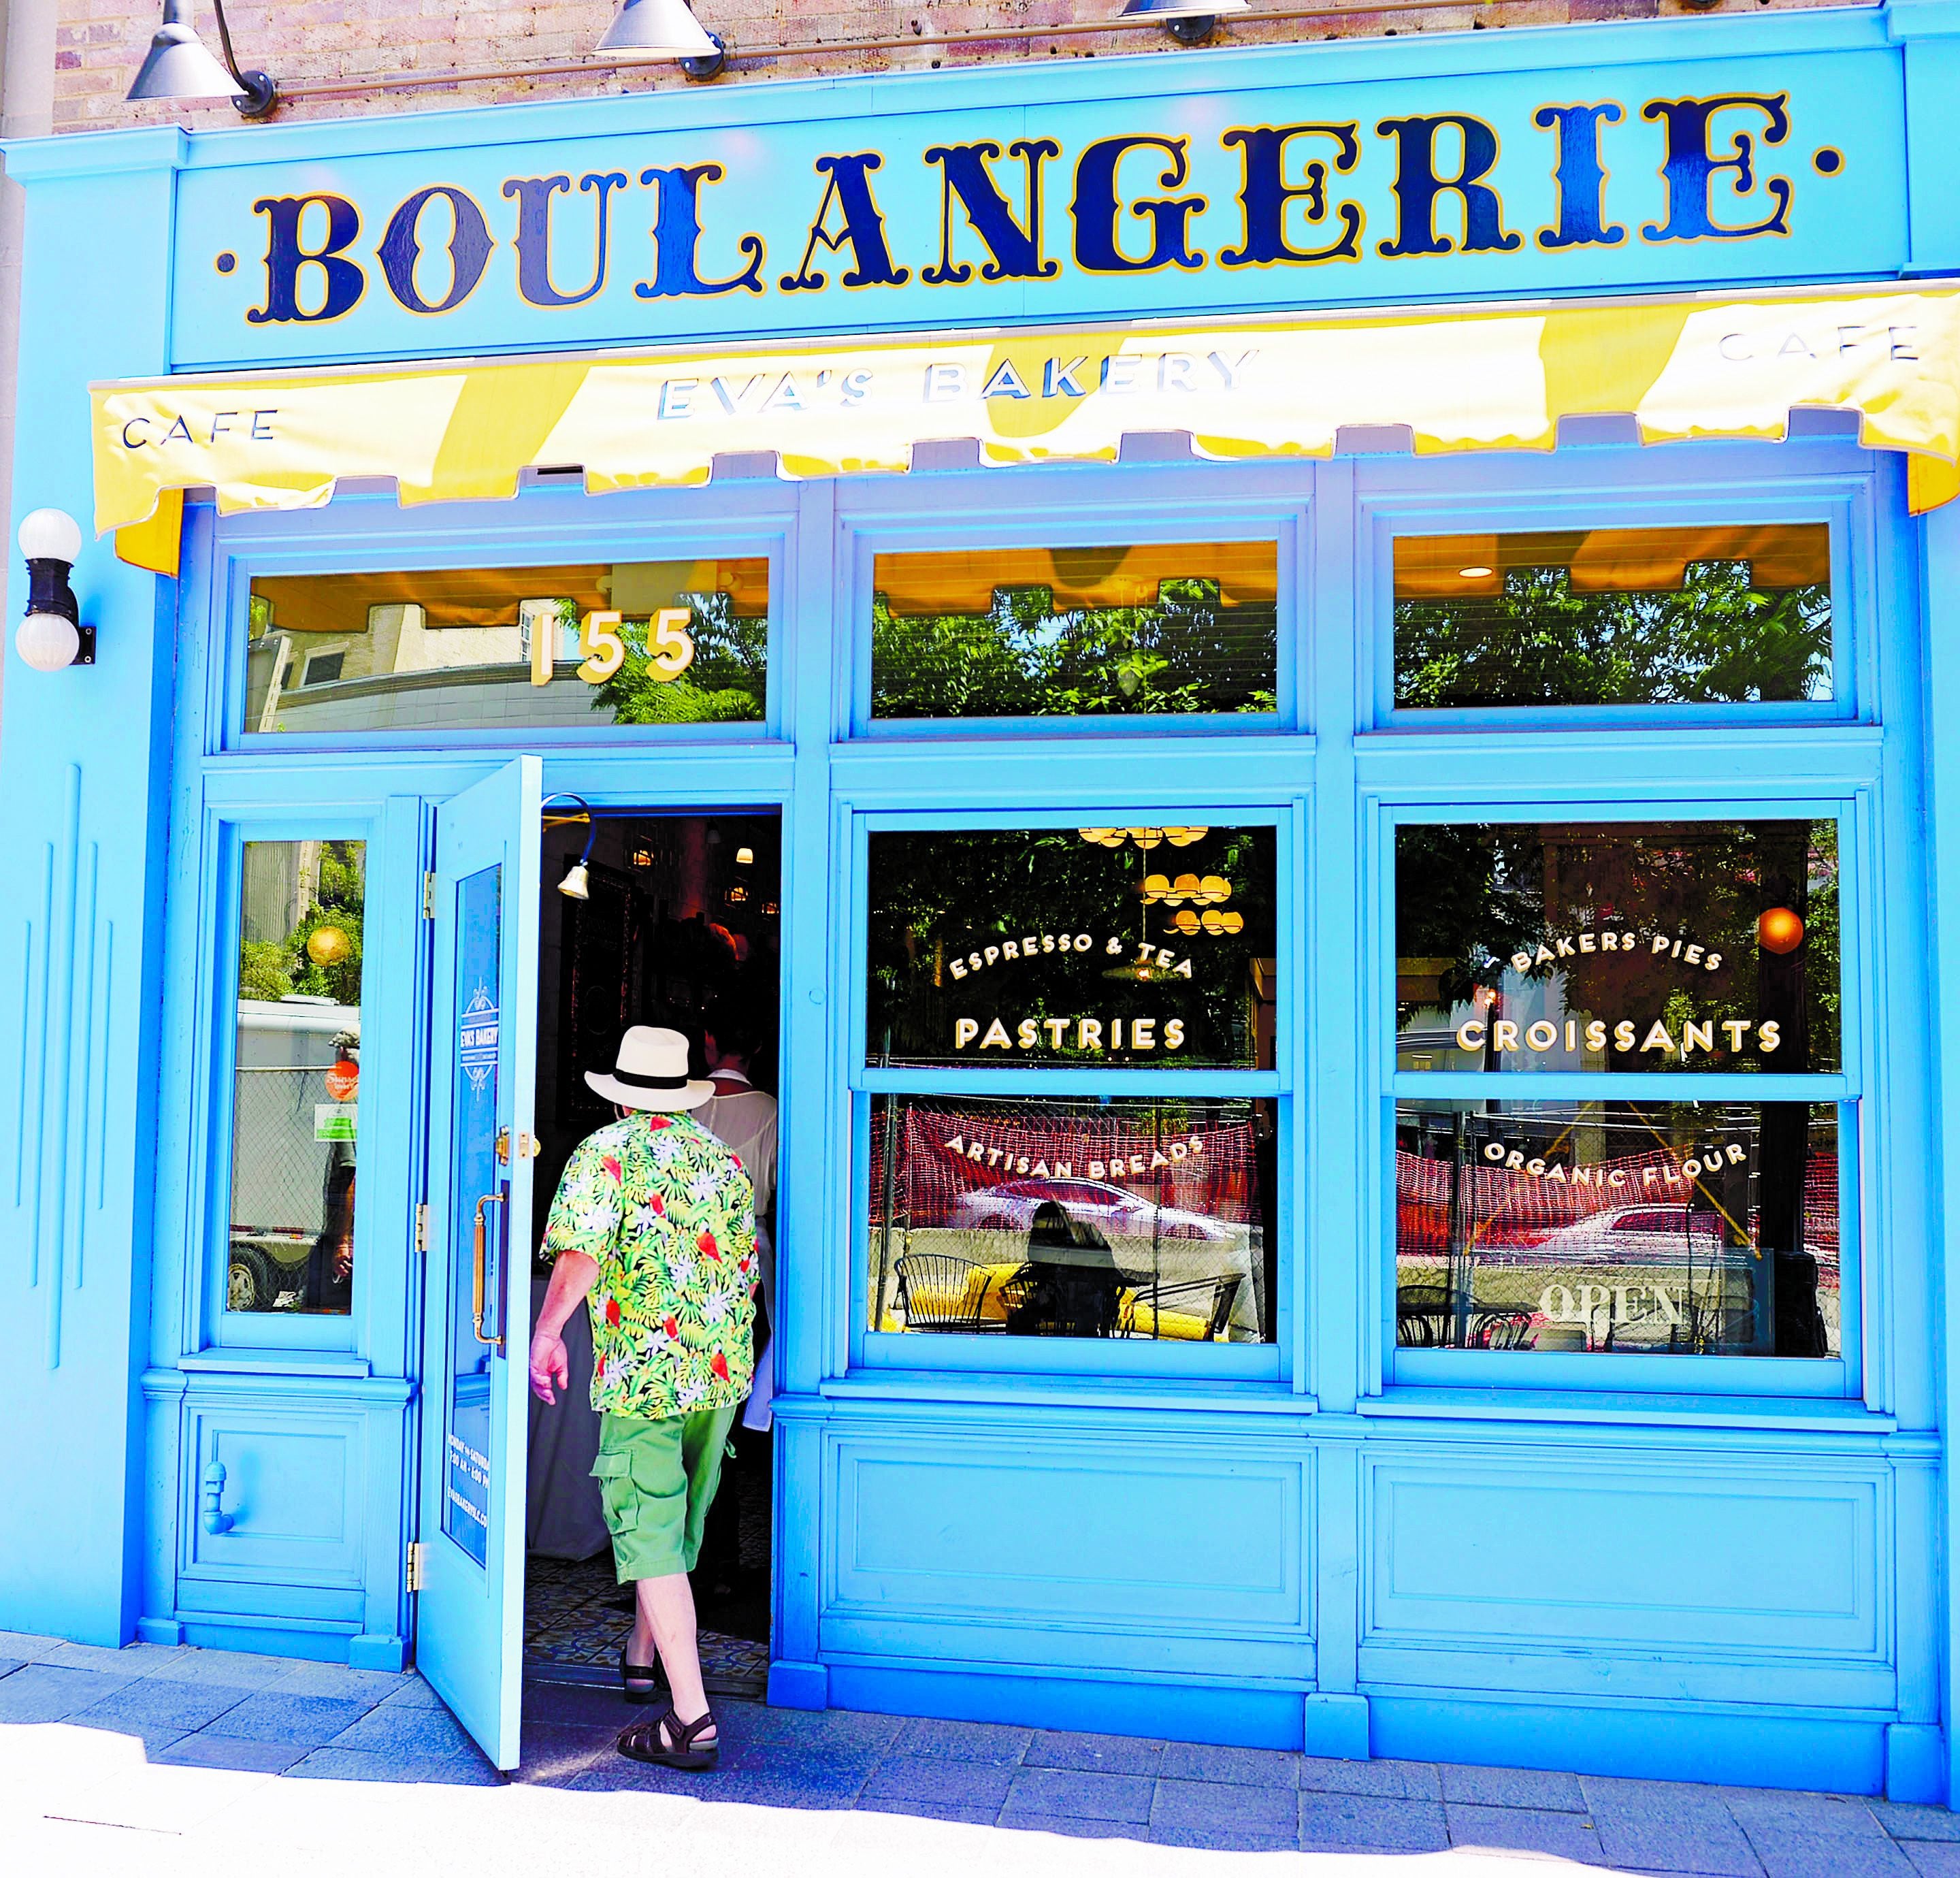 Leah Hogsten | The Salt Lake Tribune
Eva's Bakery Boulangerie offers pastries, croissants, pies, sandwiches and artisan breads, July 16, 2014.